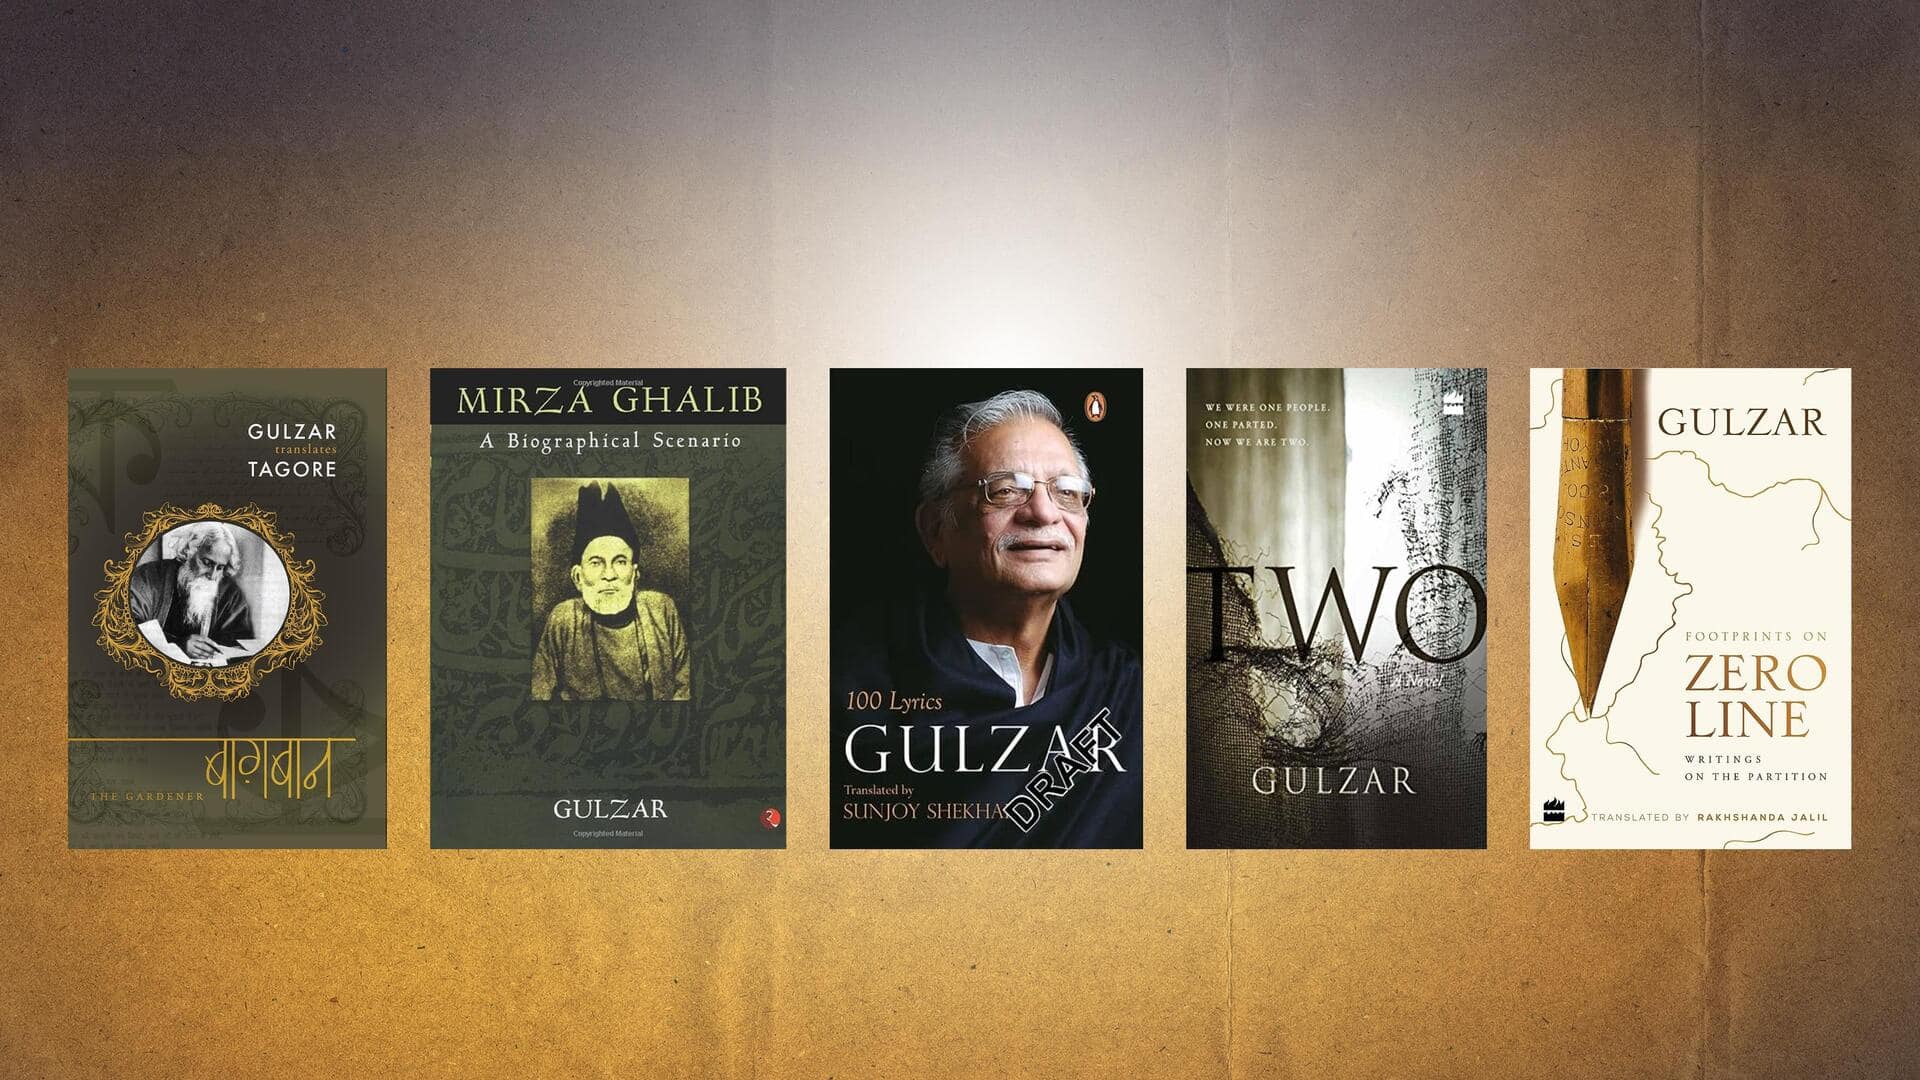 Happy birthday, Gulzar! Here are the popular poet's top books